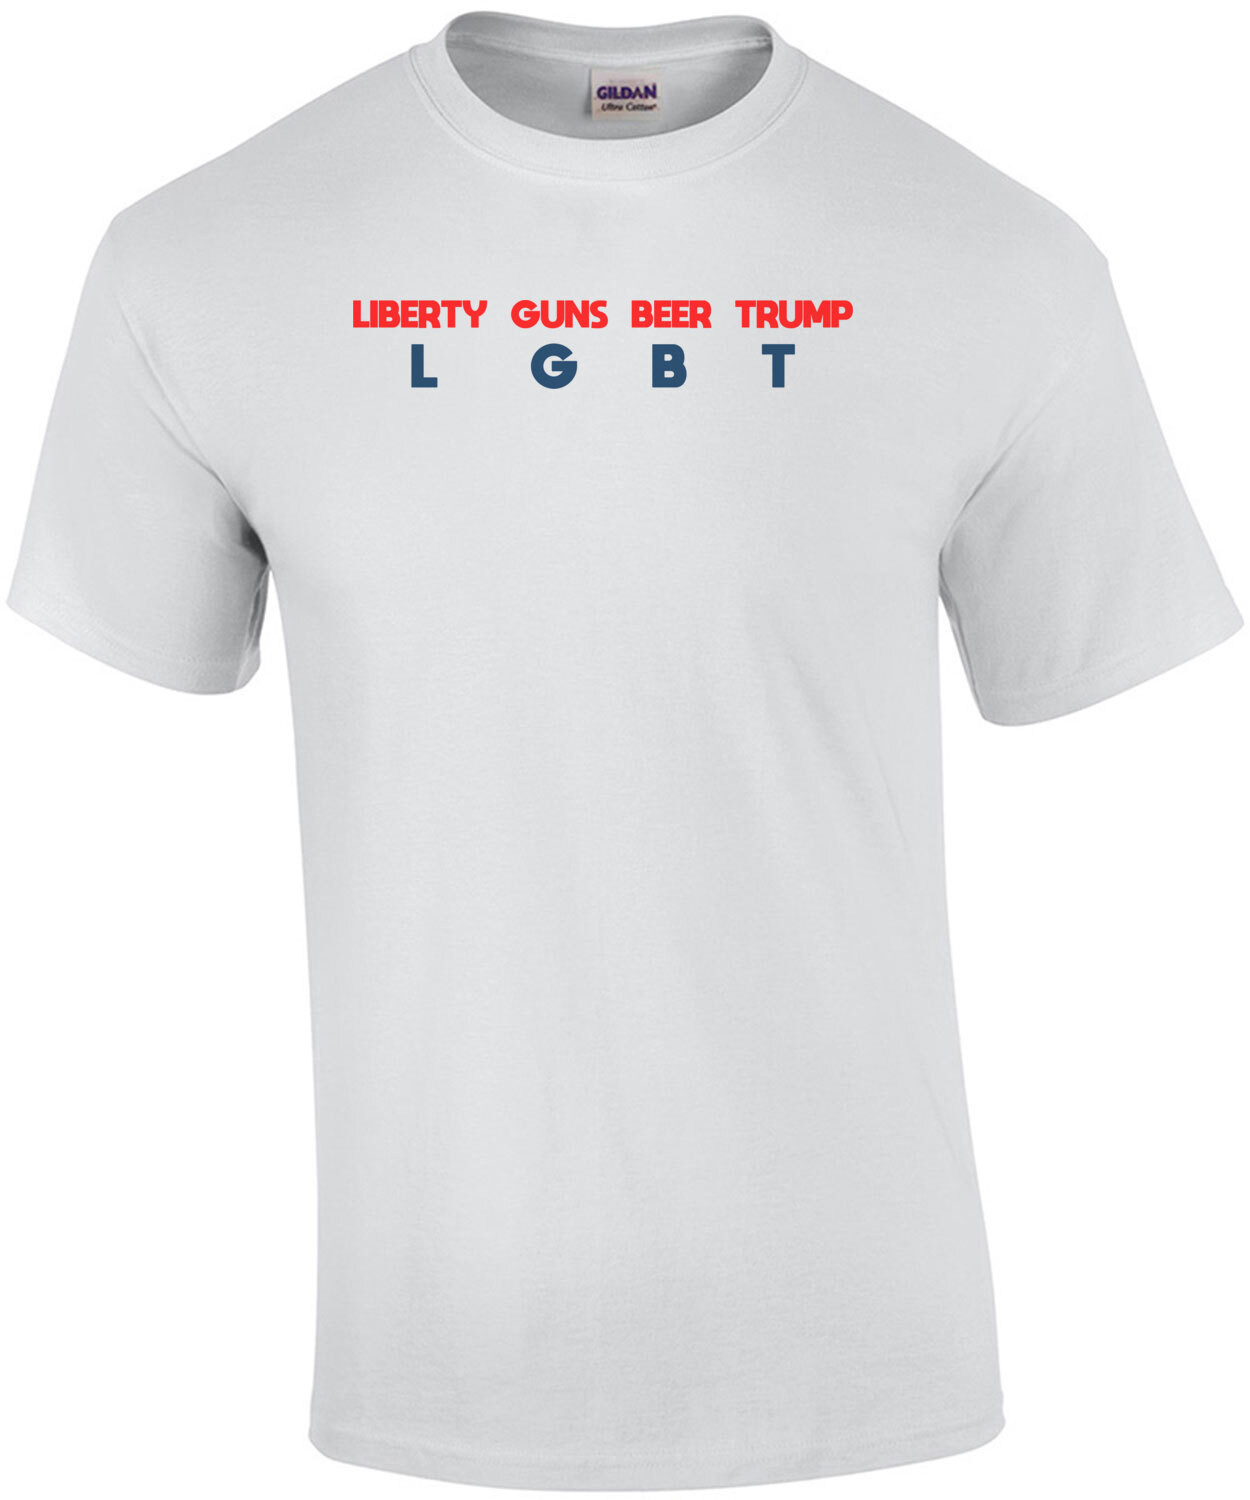 LGBT - Liberty Guns Beer Trump Pro Trump Shirt